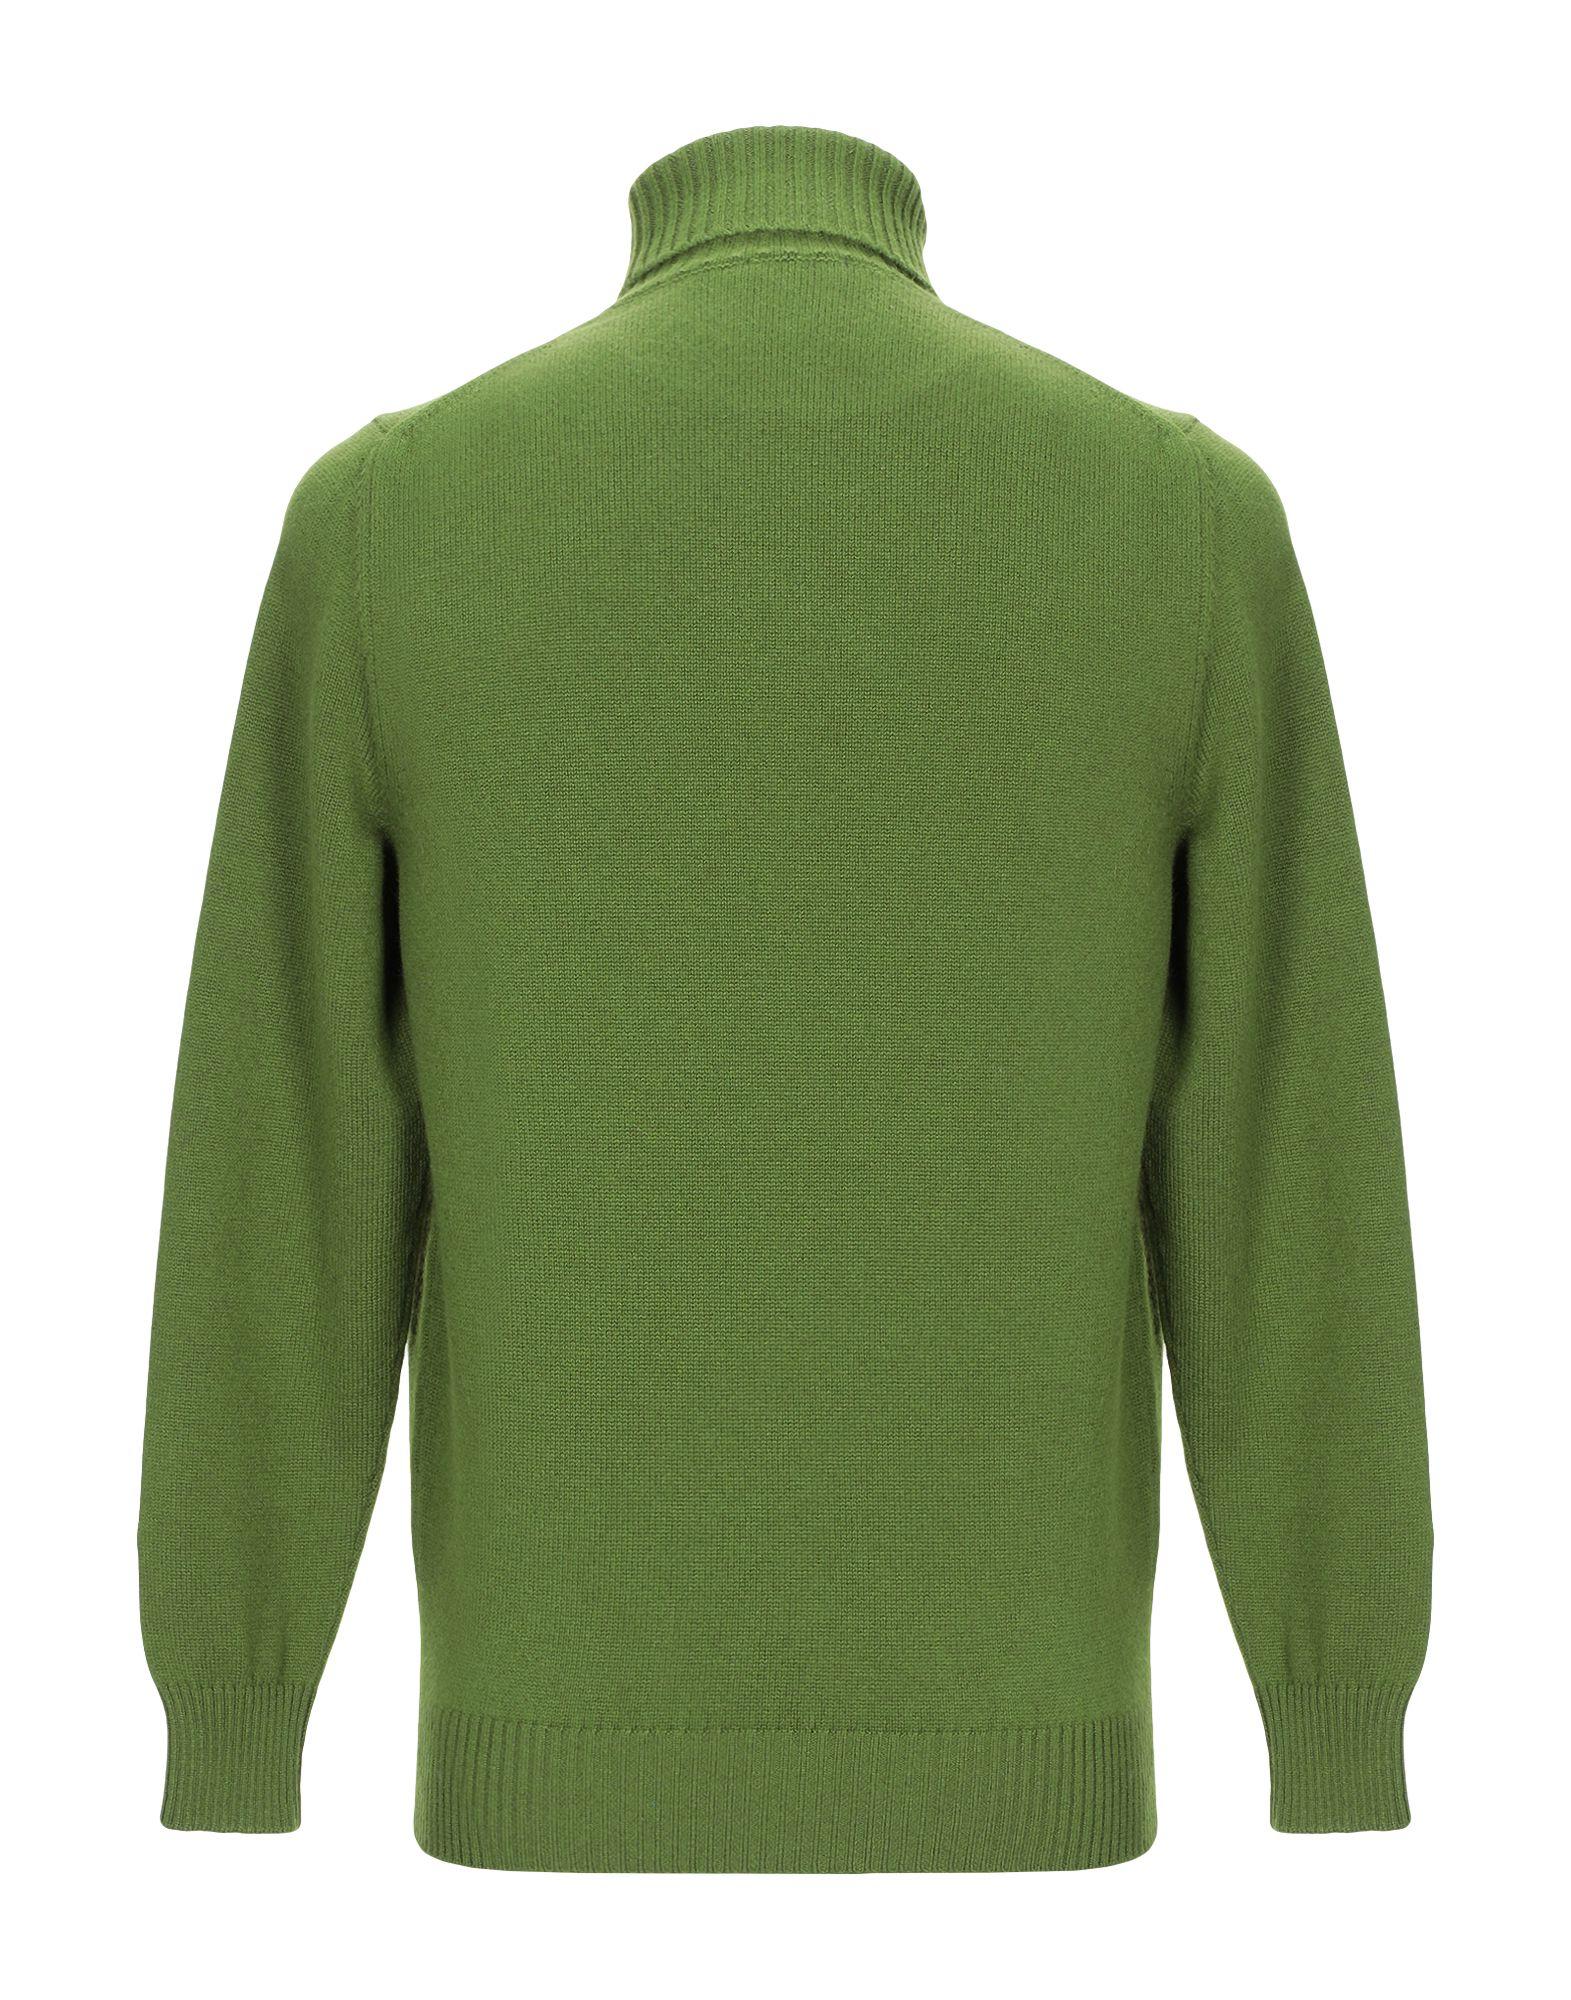 Drumohr Cashmere Turtleneck in Light Green (Green) for Men - Lyst